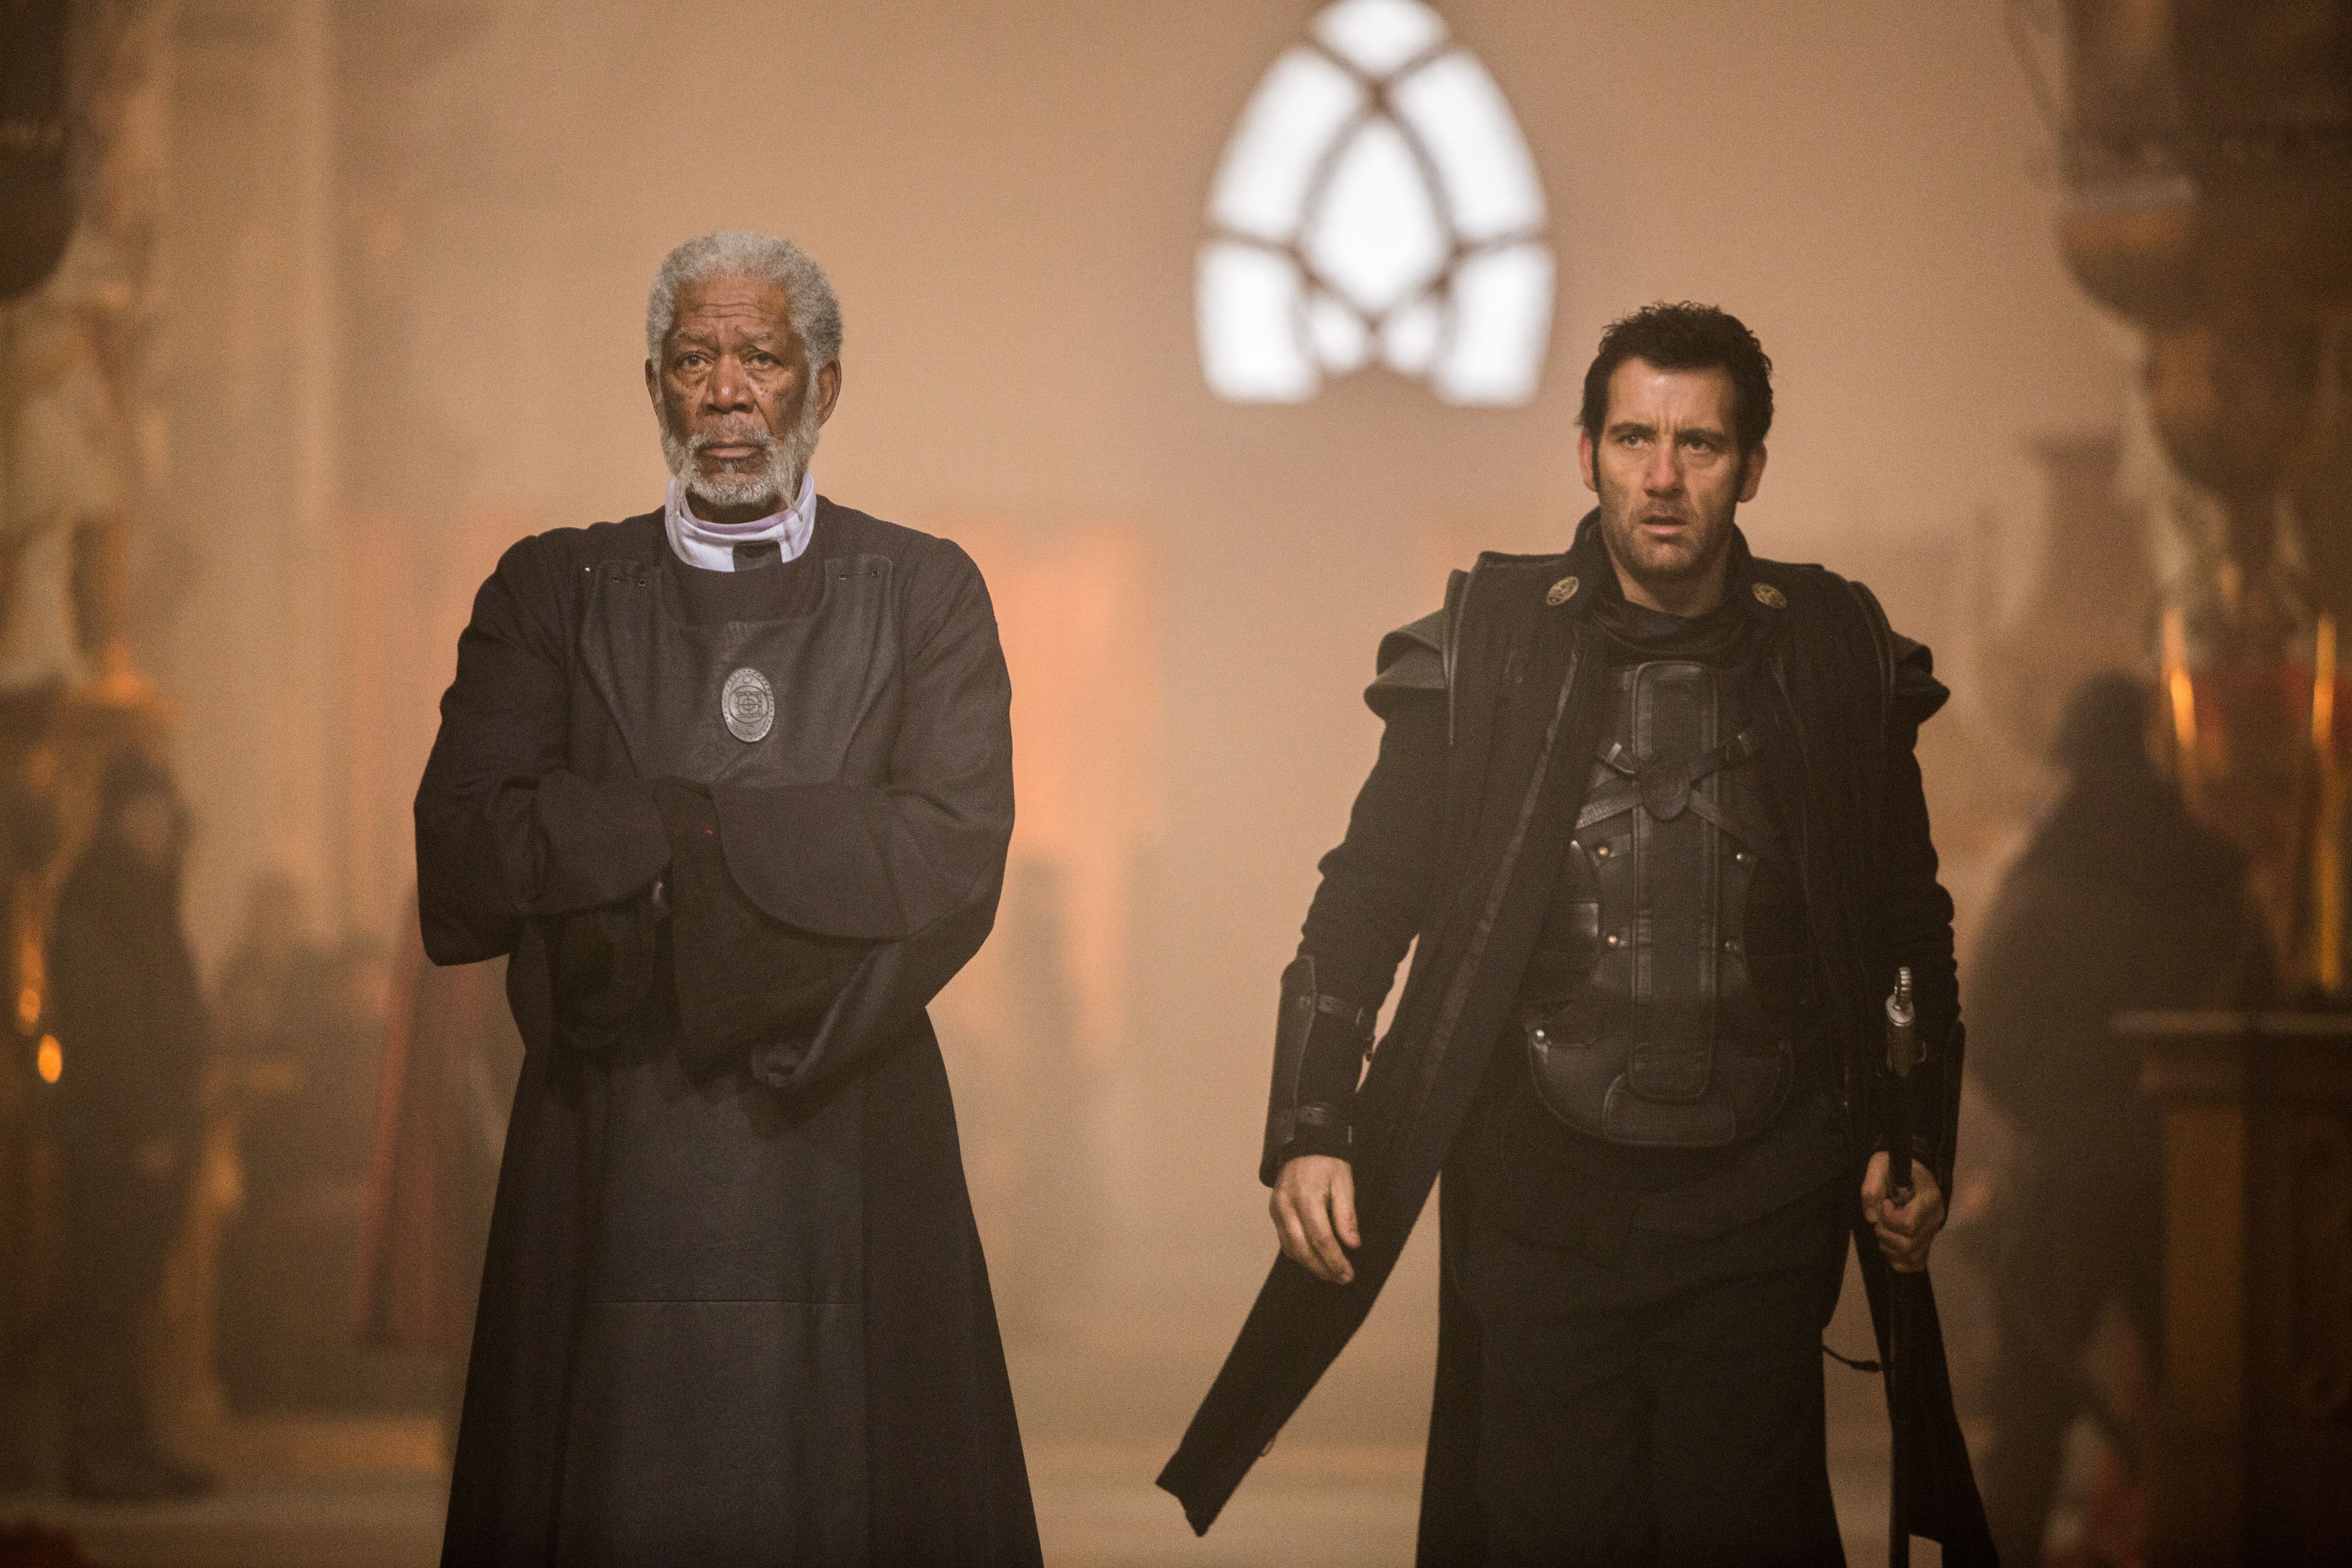 Still of Morgan Freeman and Clive Owen in Paskutiniai riteriai (2015)